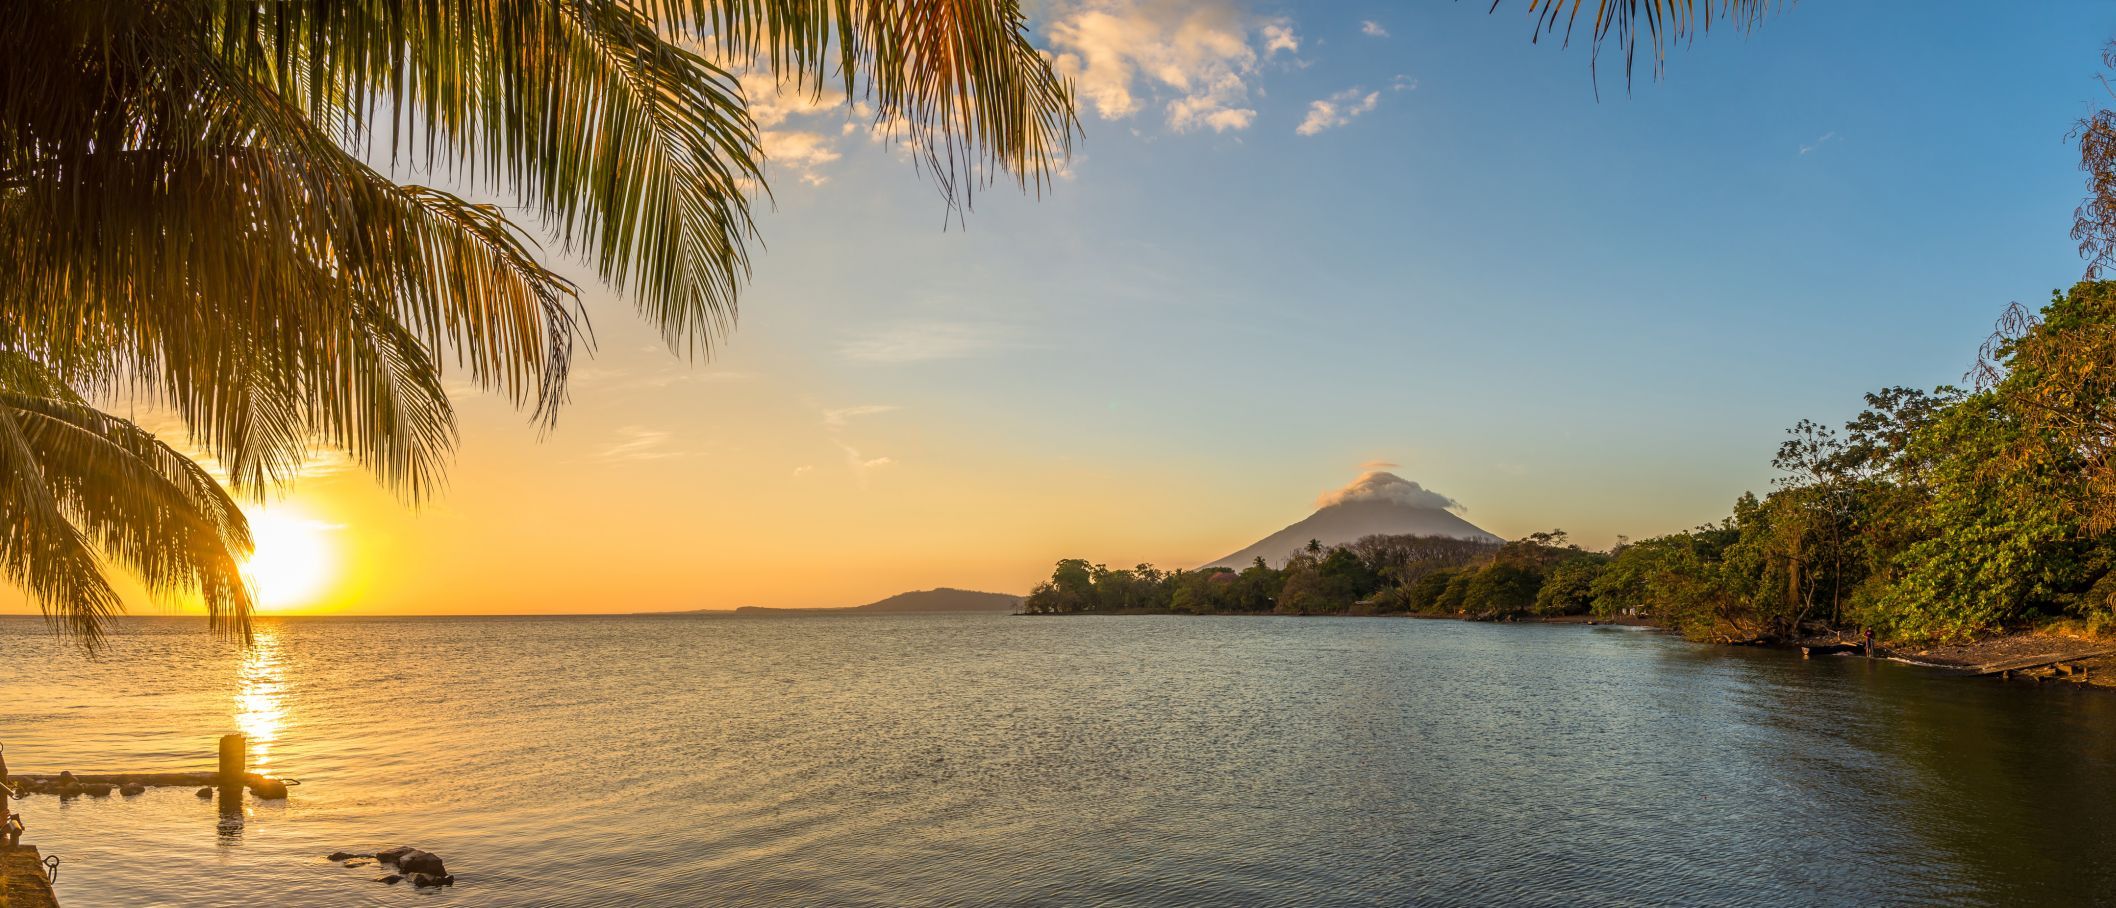  Nicaragua-See.jpg 